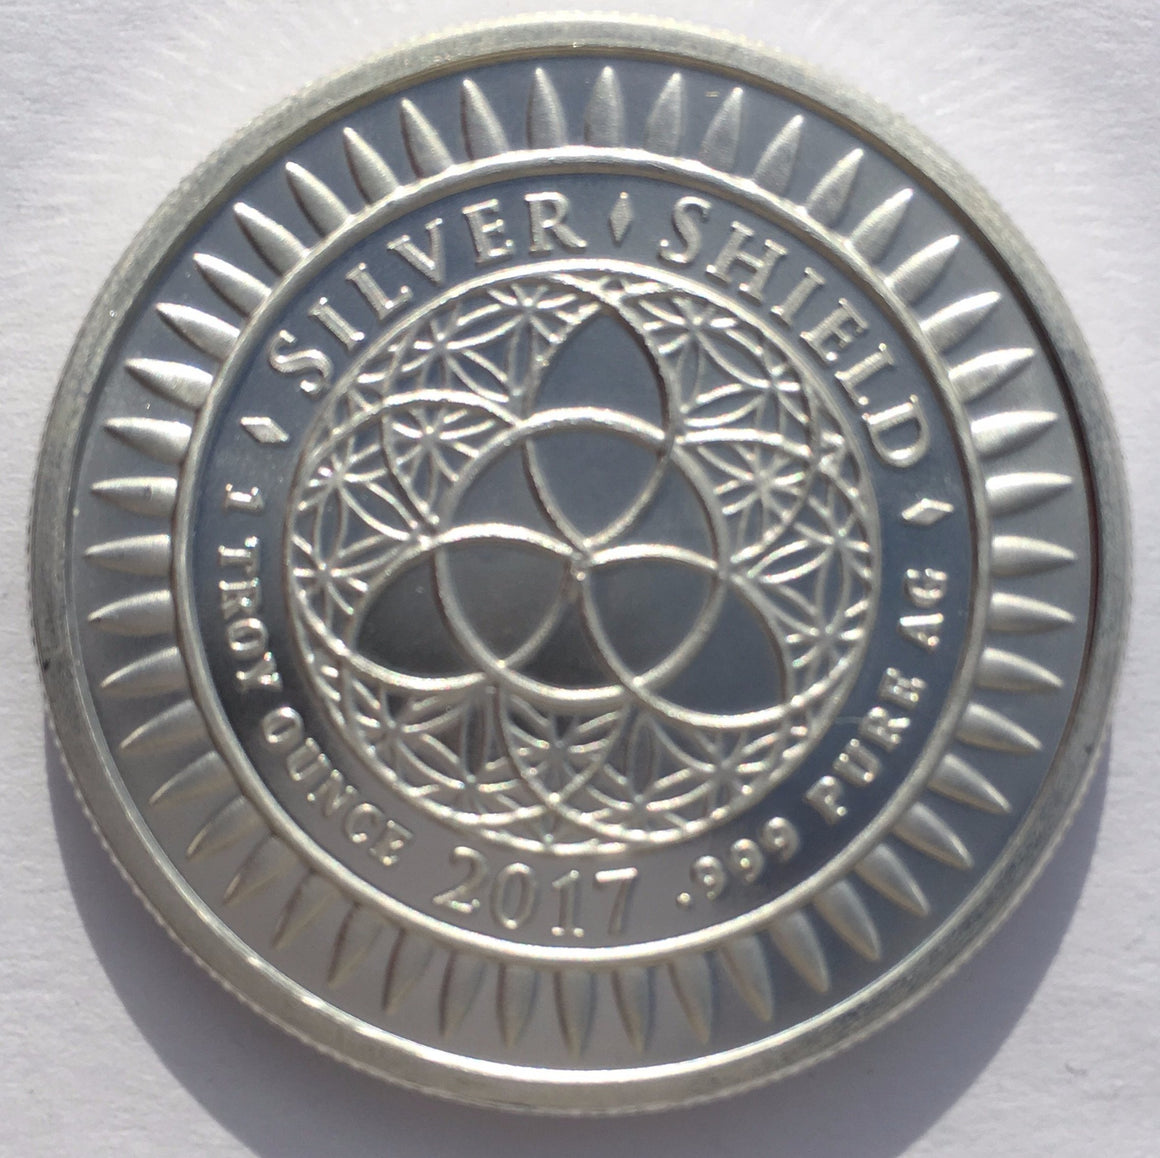 disOBEY Thoreau by Silver Shield, Mini Mintage - BU 1 oz .999 Silver Round